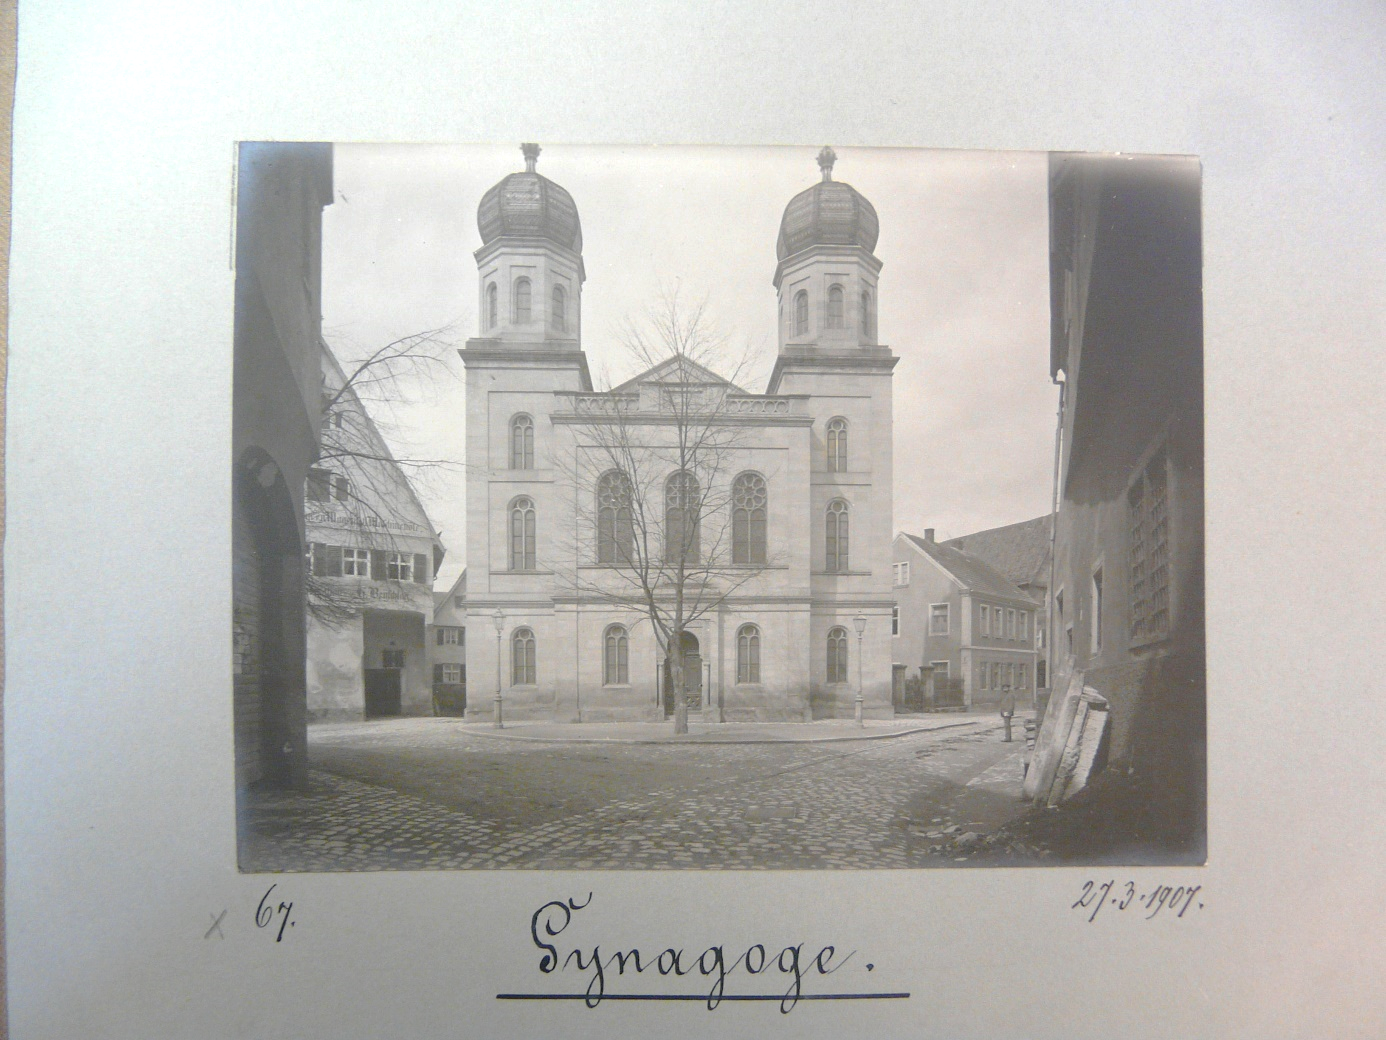 Bild der Noerdlinger Synagoge Quelle Stadtarchiv Kellermann Album 23 3 1907